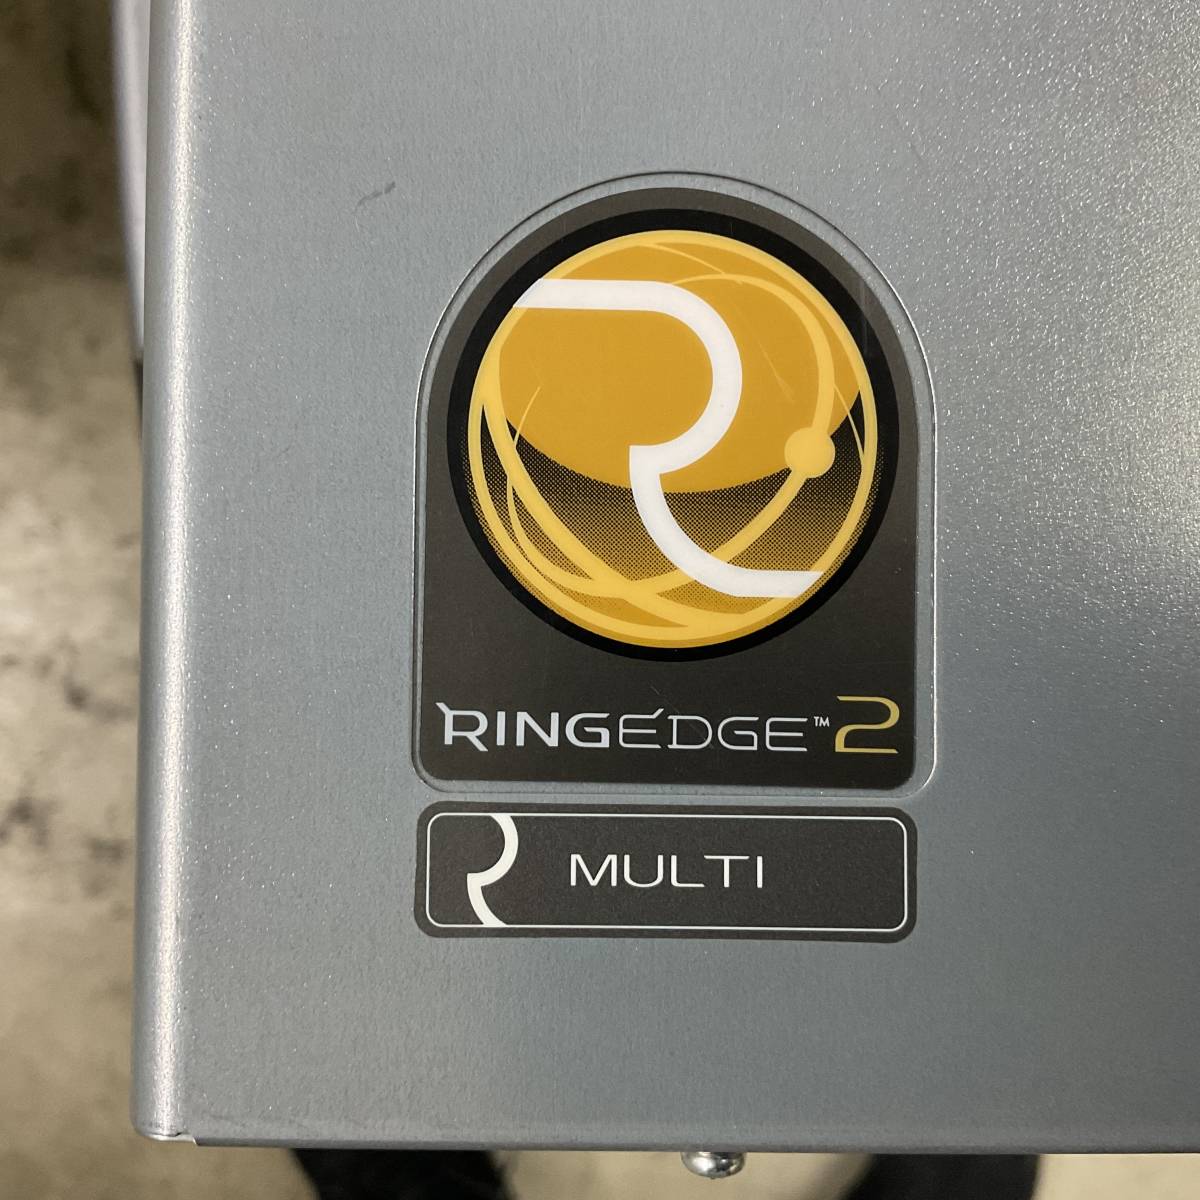  Sega ring edge 2 multi used ALL. Net P-ras MULTI for key chip * communication environment no error 